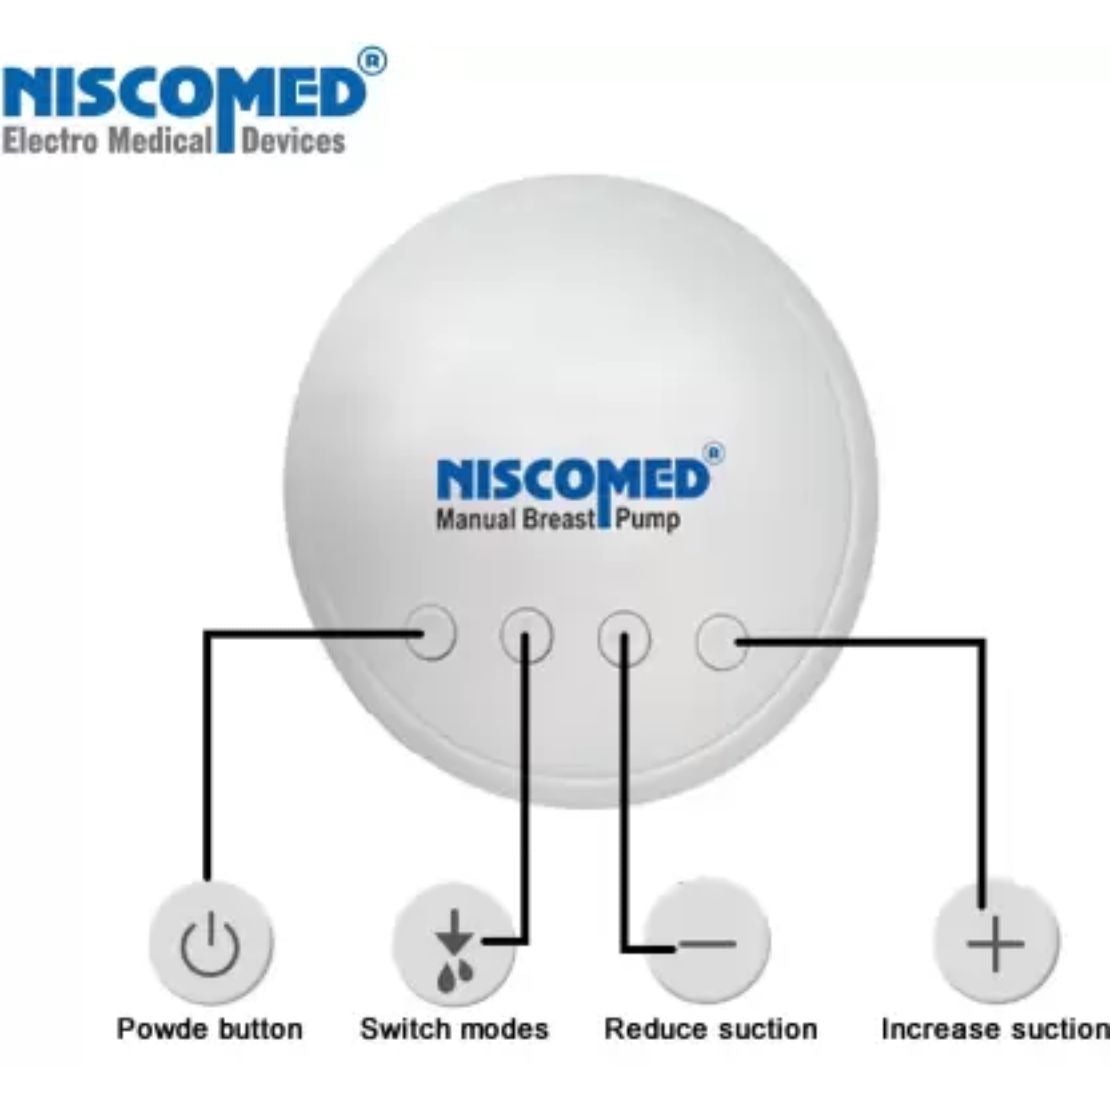 Niscomed Electric Breast Pump